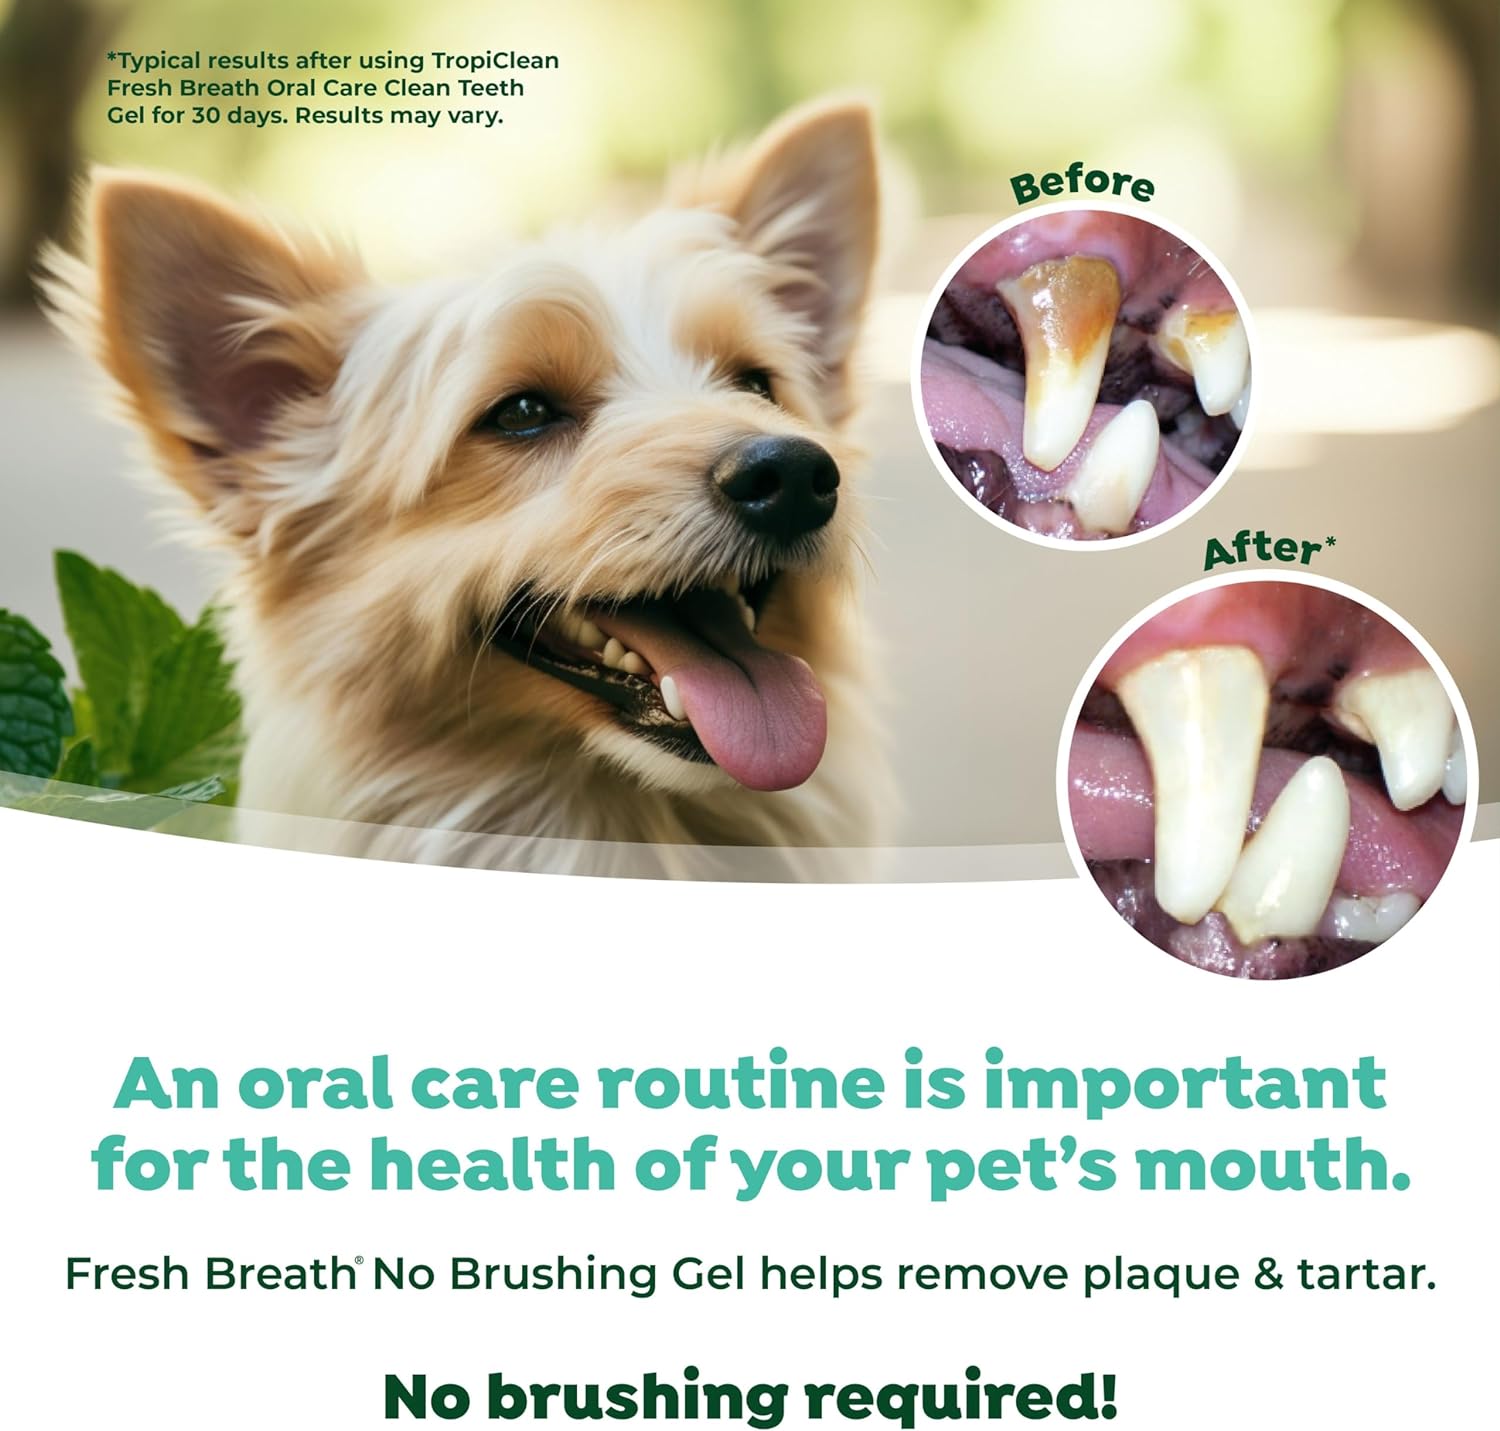 TropiClean Fresh Breath Dog Teeth Cleaning Gel - No Brushing Dental Care - Breath Freshener Oral Care - Complete Dog Teeth Cleaning Solution - Helps Remove Plaque & Tartar, Original, 118ml :Health & Personal Care